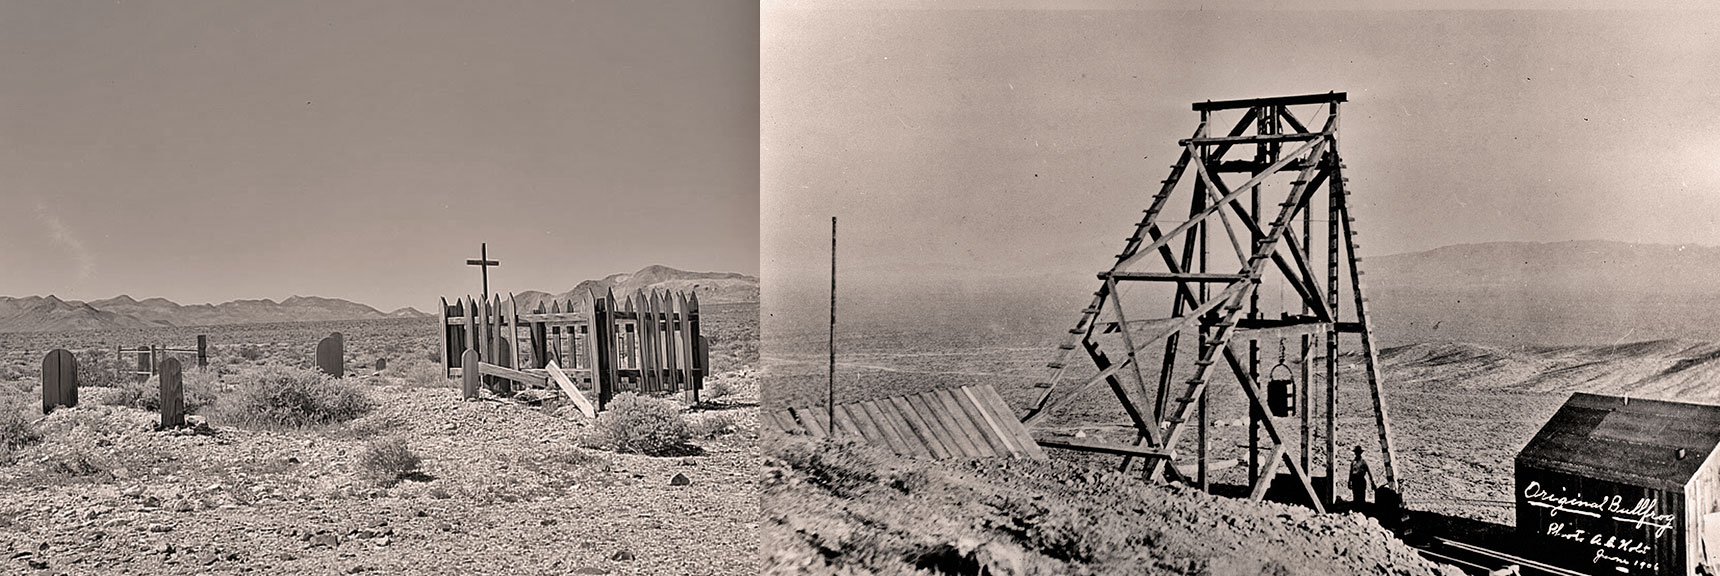 Rhyolite Cemetery in 1940 and Original Bull Frog Mine 1906 | Rhyolite Ghost Town, Nevada